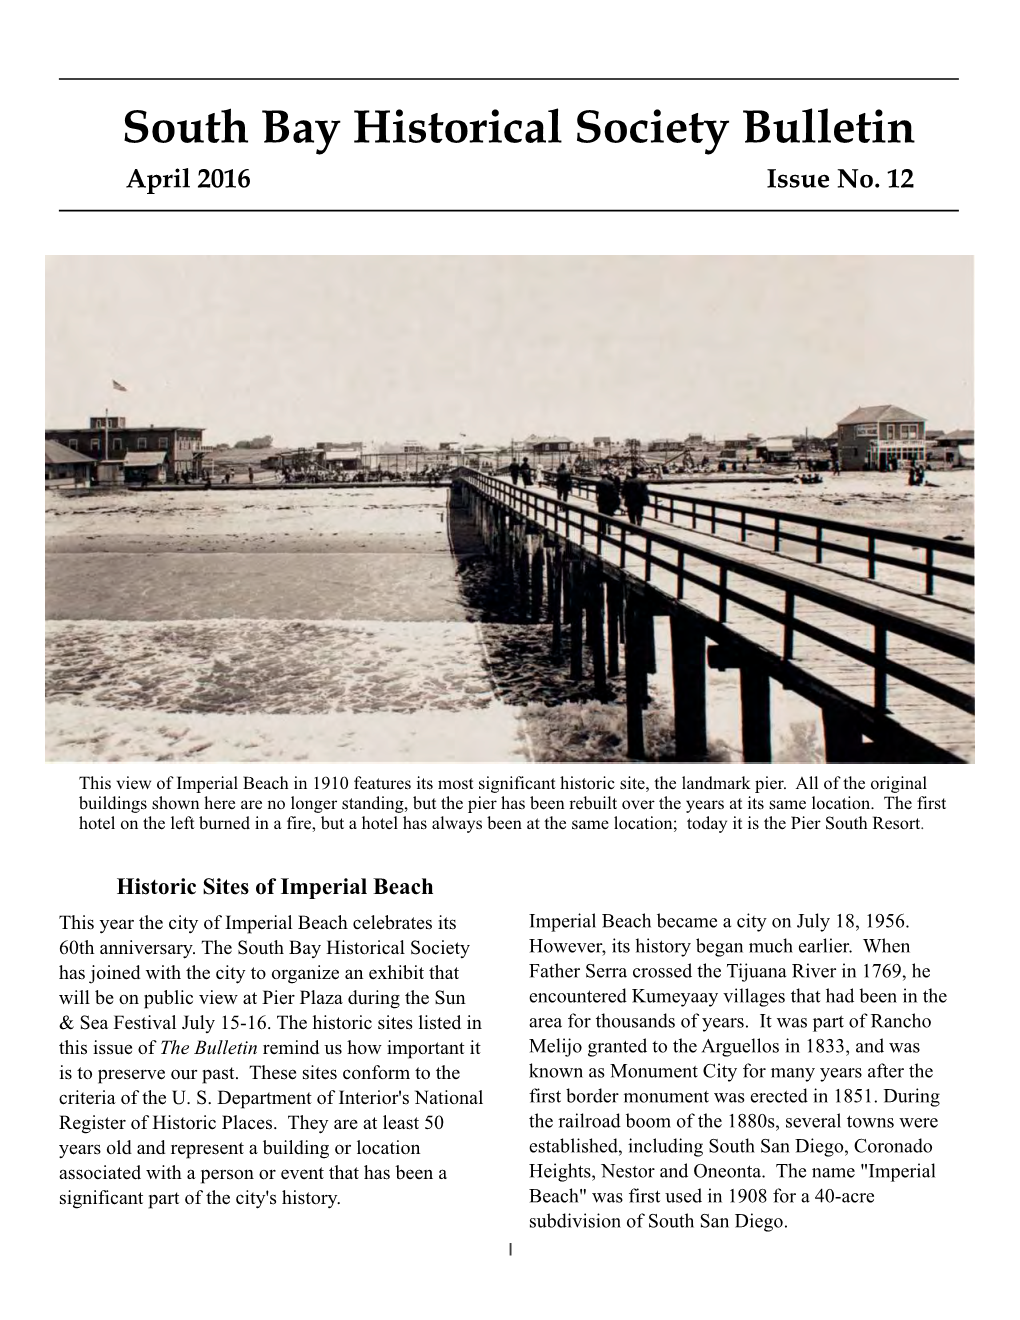 South Bay Historical Society Bulletin April 2016 Issue No